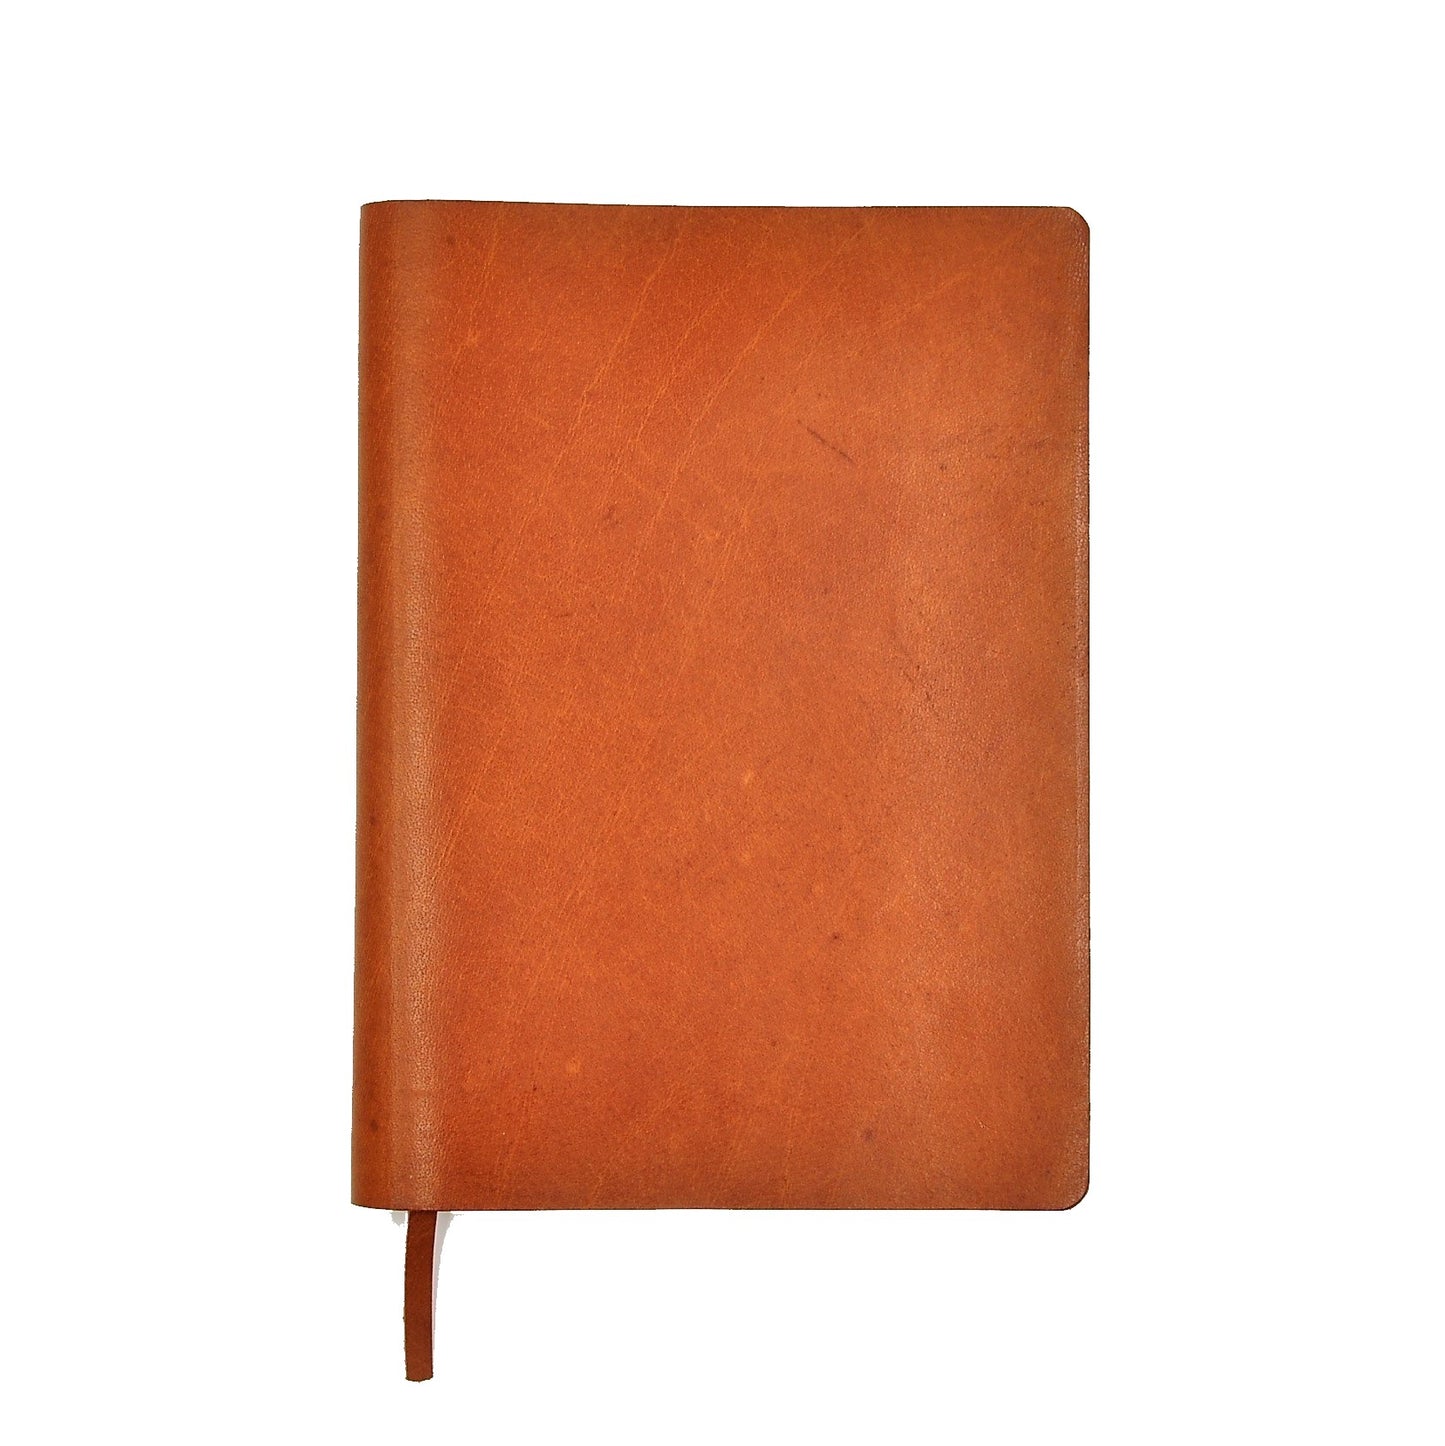 ACADEMY A5-P Leather Plain Designer's Journal